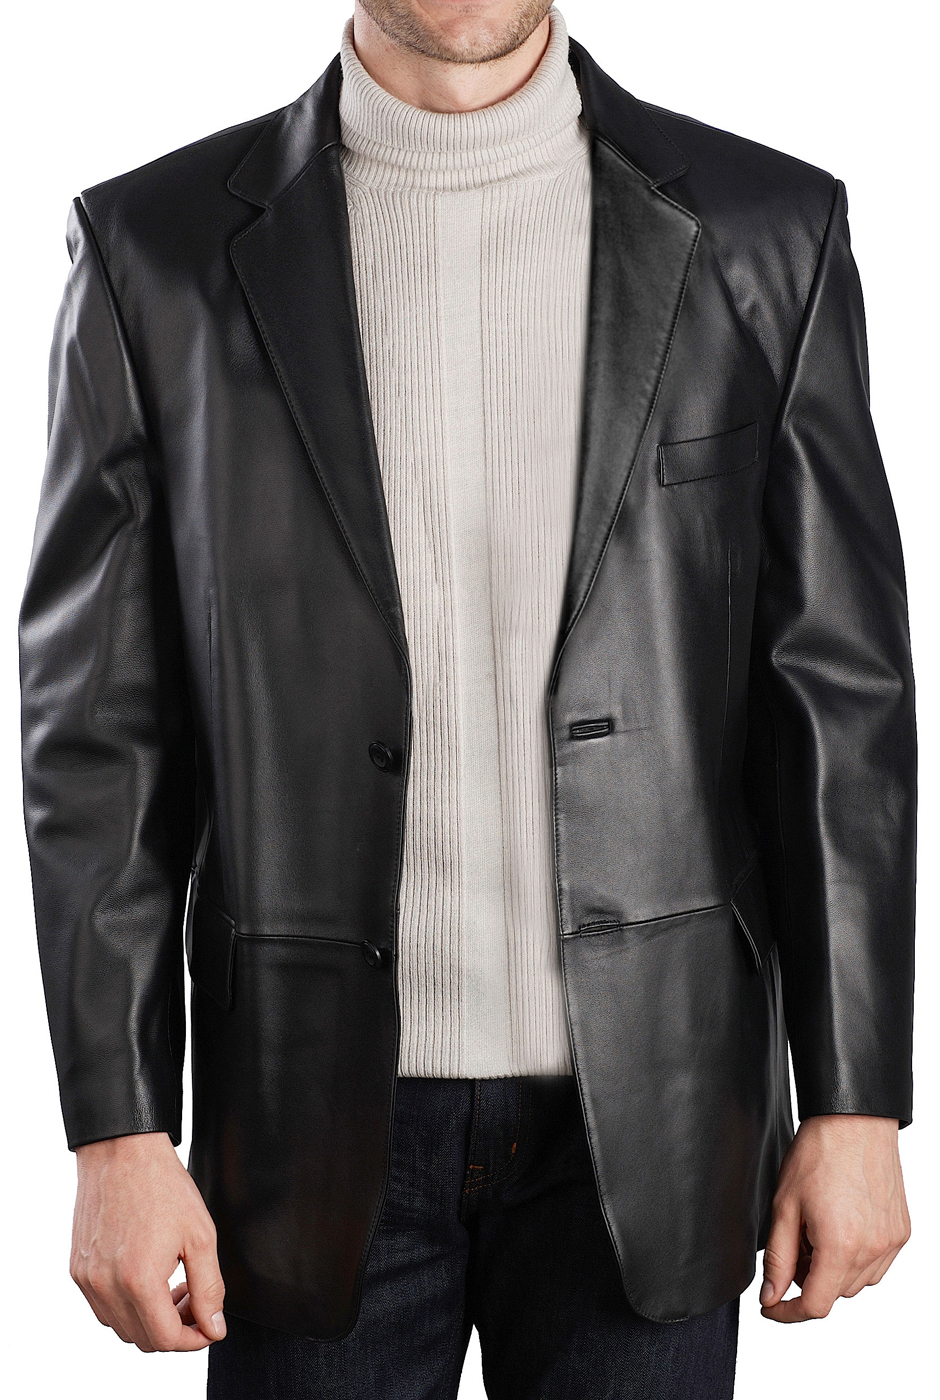 BGSD Men's Richard Classic 2-Button Leather Blazer Lambskin Sport Coat Jacket - Regular and Tall